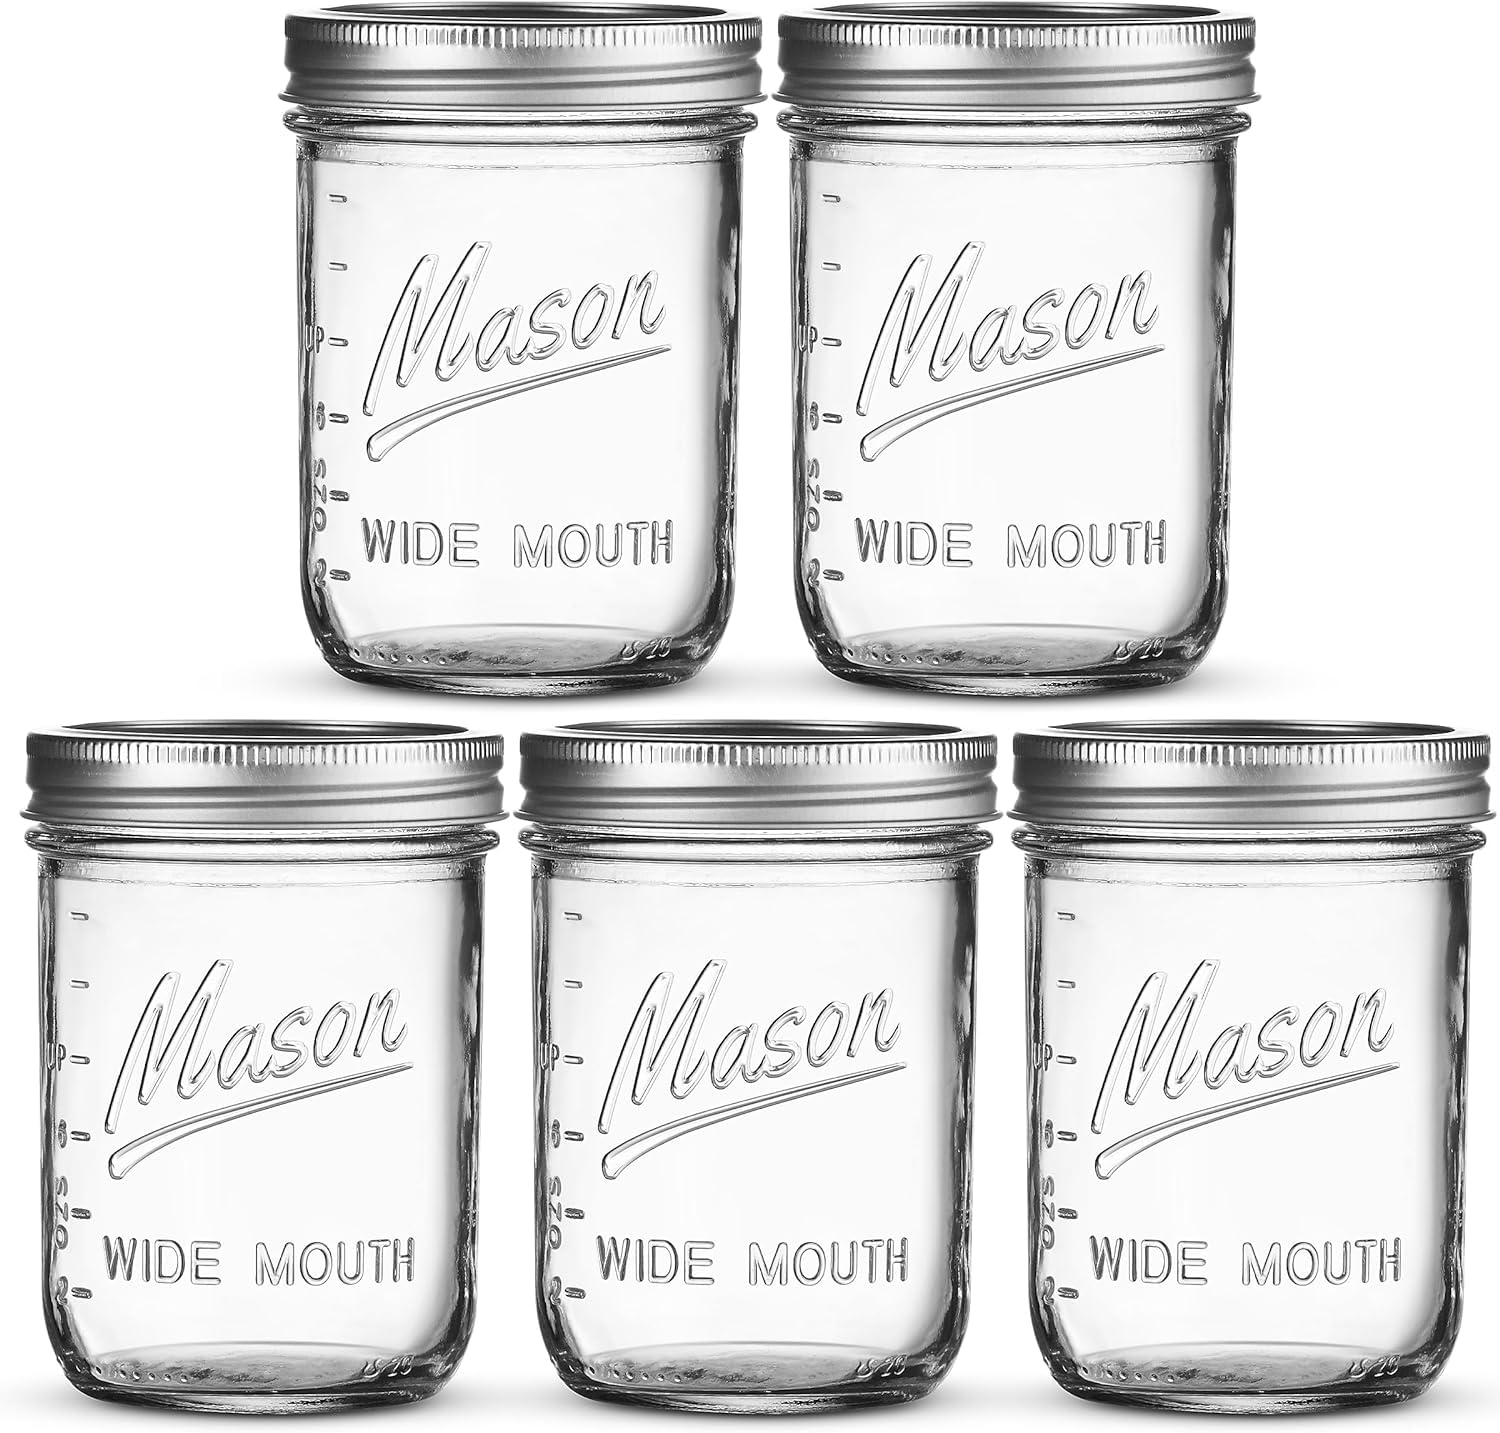 SEWANTA Wide Mouth Mason Jars 16 oz [5 Pack] With mason jar lids and Bands, mason jars 16 oz - For Canning, Fermenting, Pickling - Jar D�cor - Microwave/Freeze/Dishwasher Safe.  - Very Good